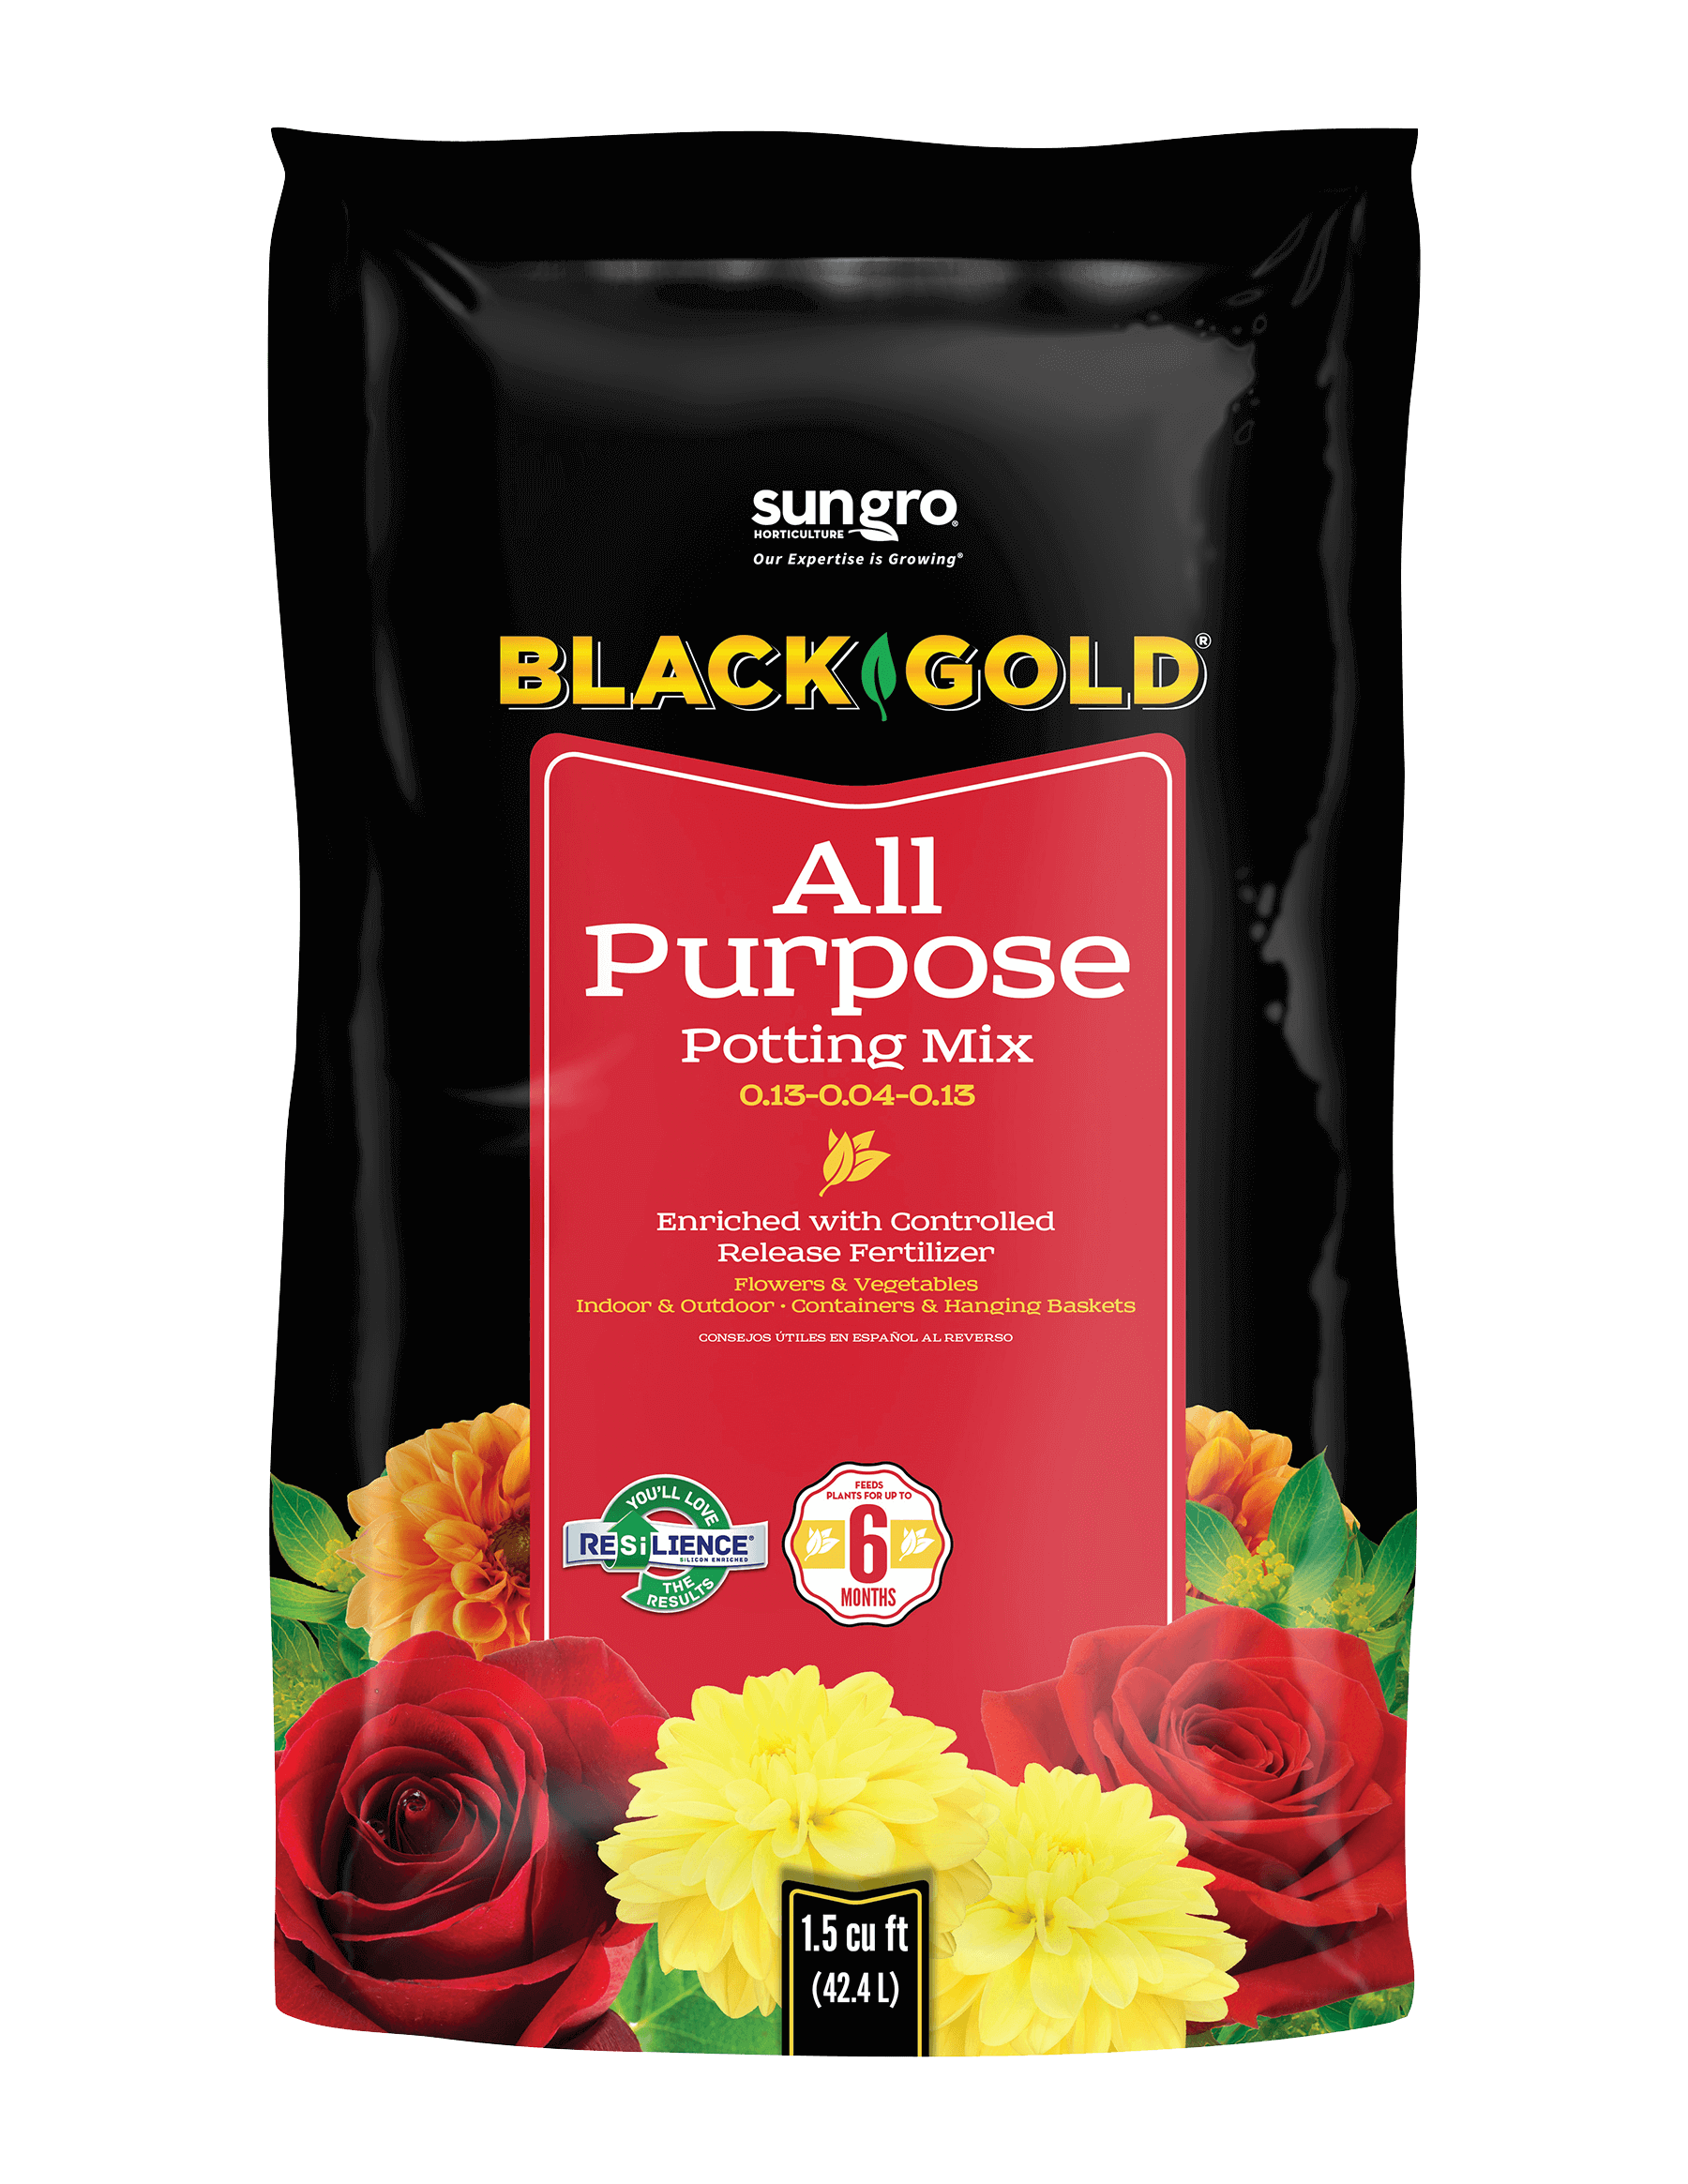 Black Gold® All Purpose Potting Mix 0.13 – 0.04 – 0.13 – Black Gold